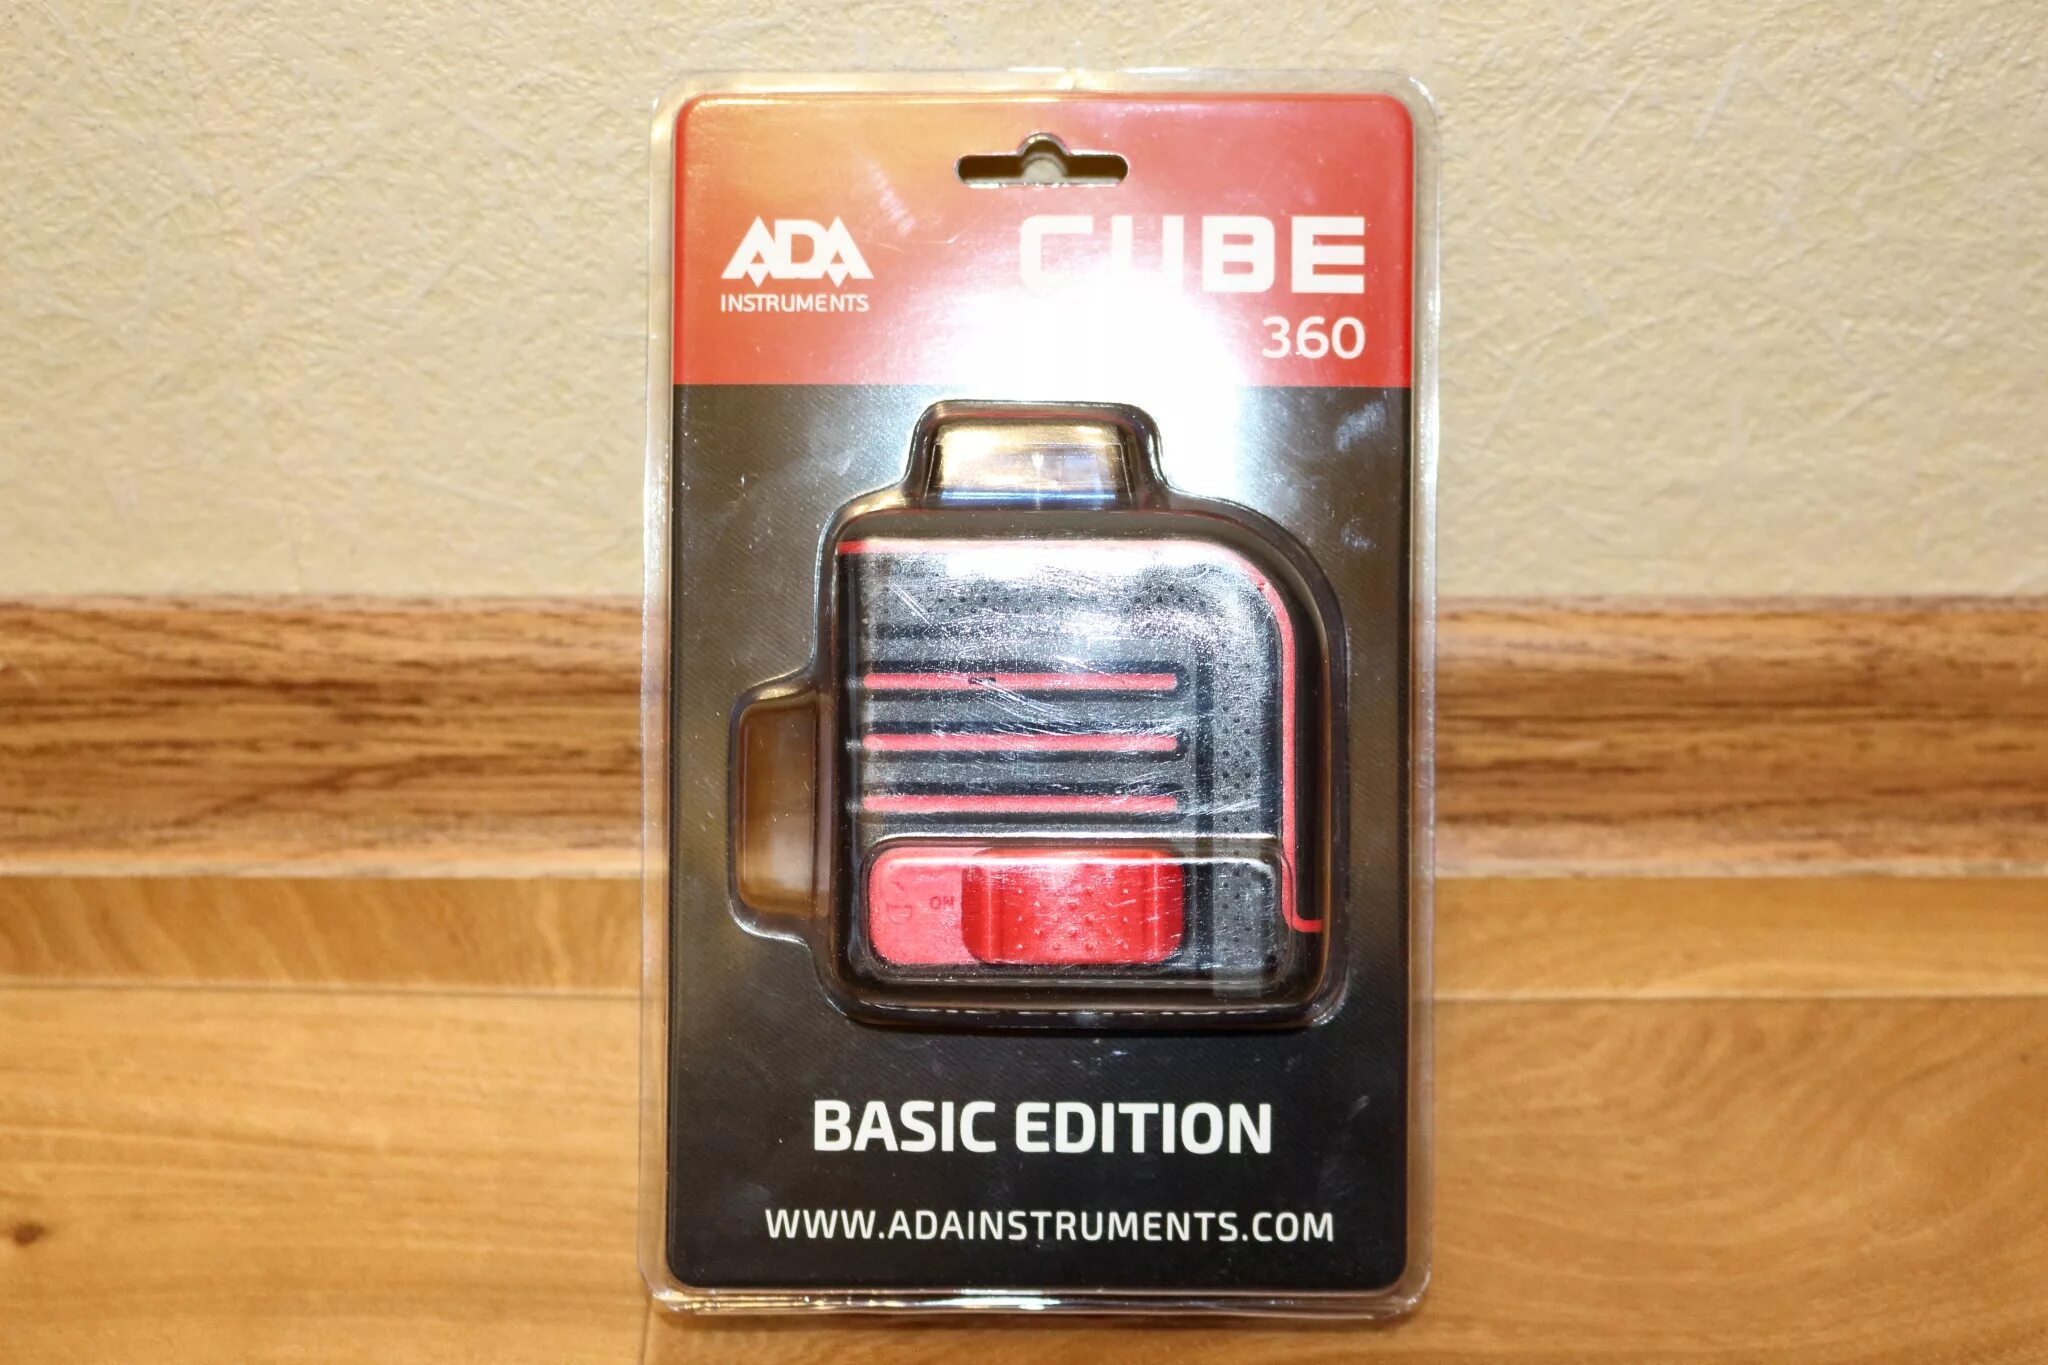 Cube 360 basic edition. Лазерный уровень ada Cube 360 Basic Edition. Ada: лазерный уровень Cube Basic Edition. Лазерный уровень ada Cube 3-360 кейс. Уровень лазерный ada Basic упаковка.